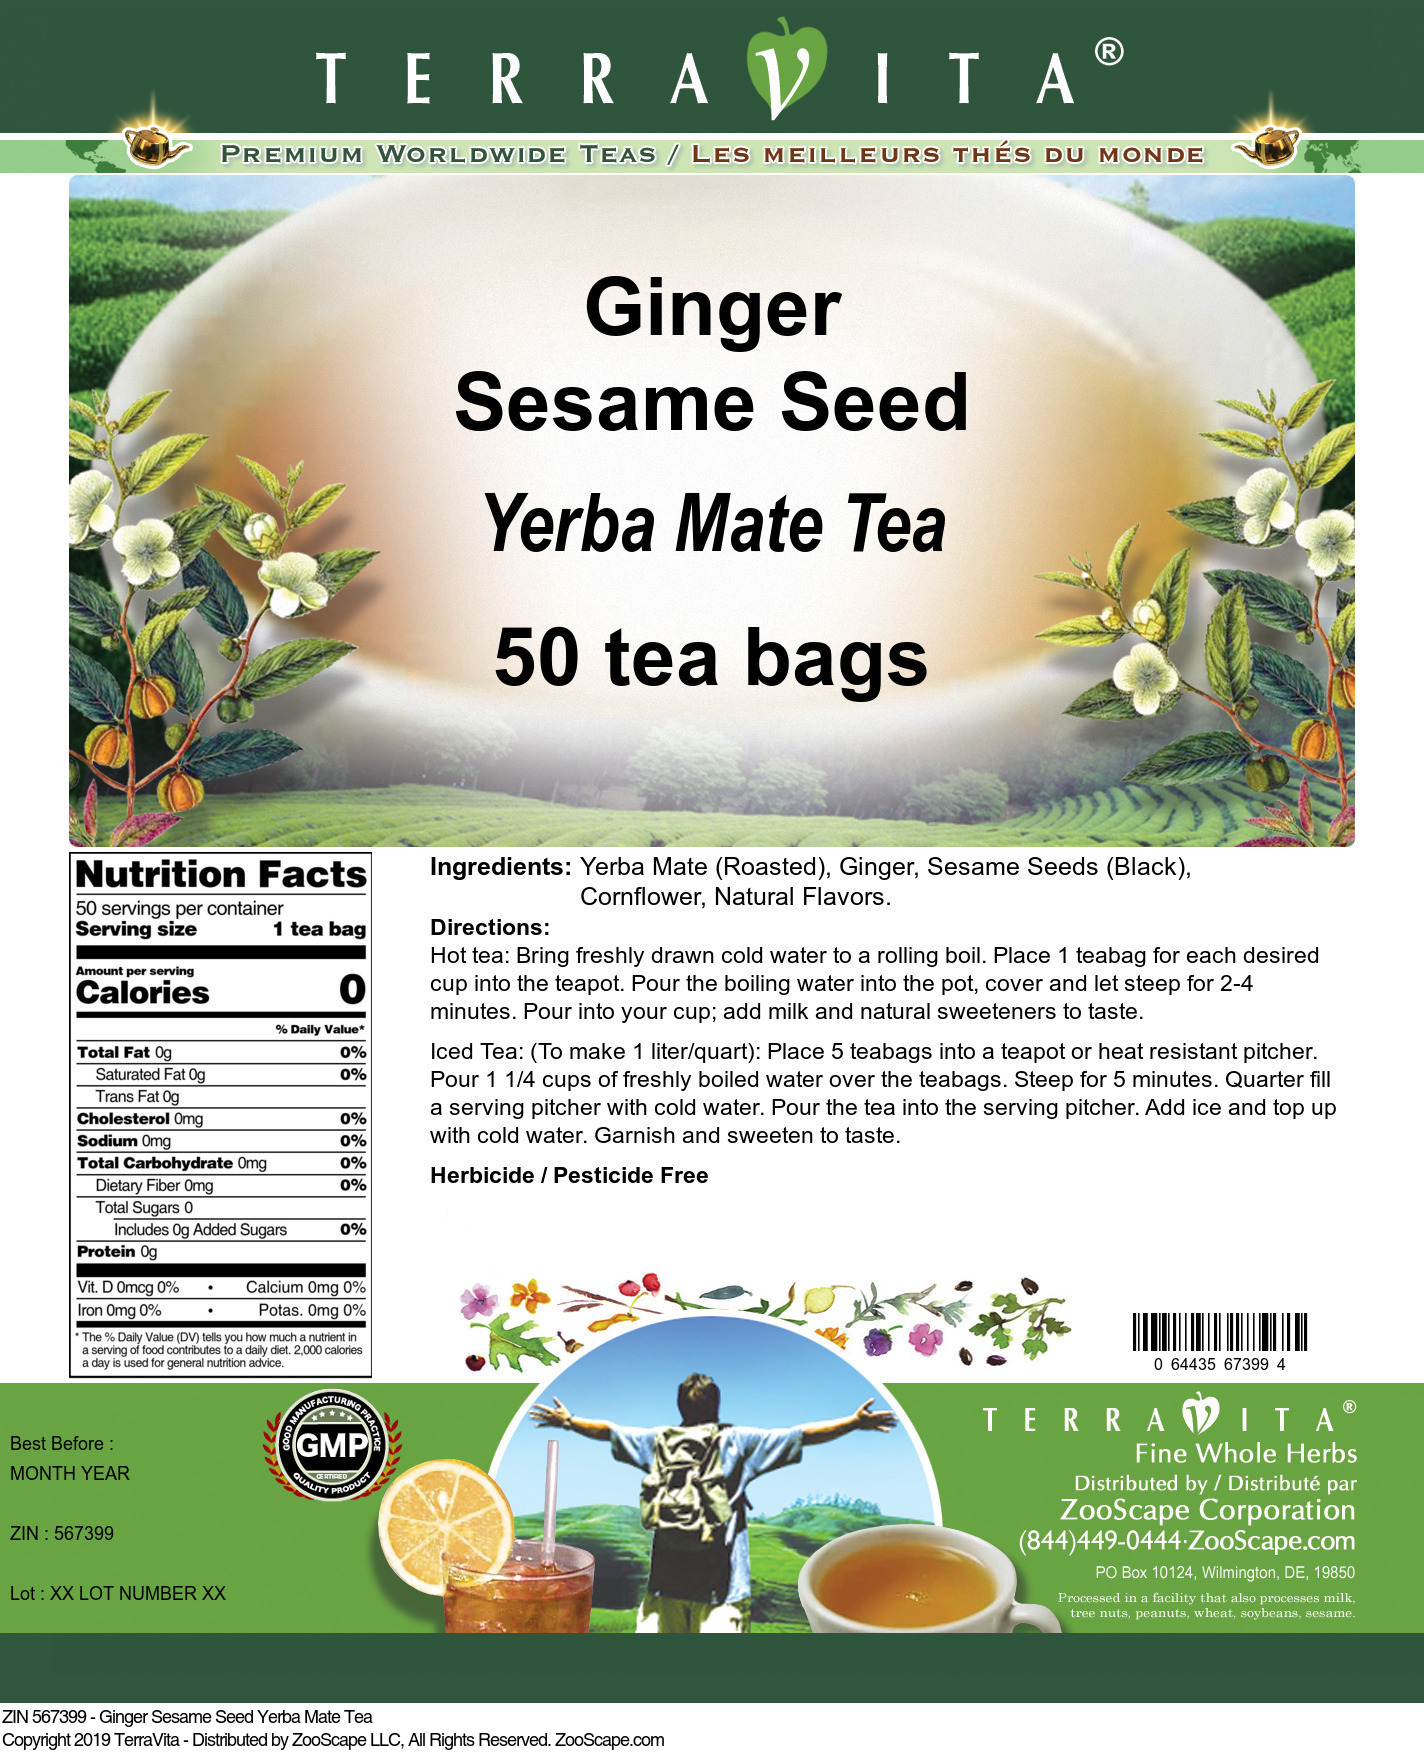 Ginger Sesame Seed Yerba Mate Tea - Label